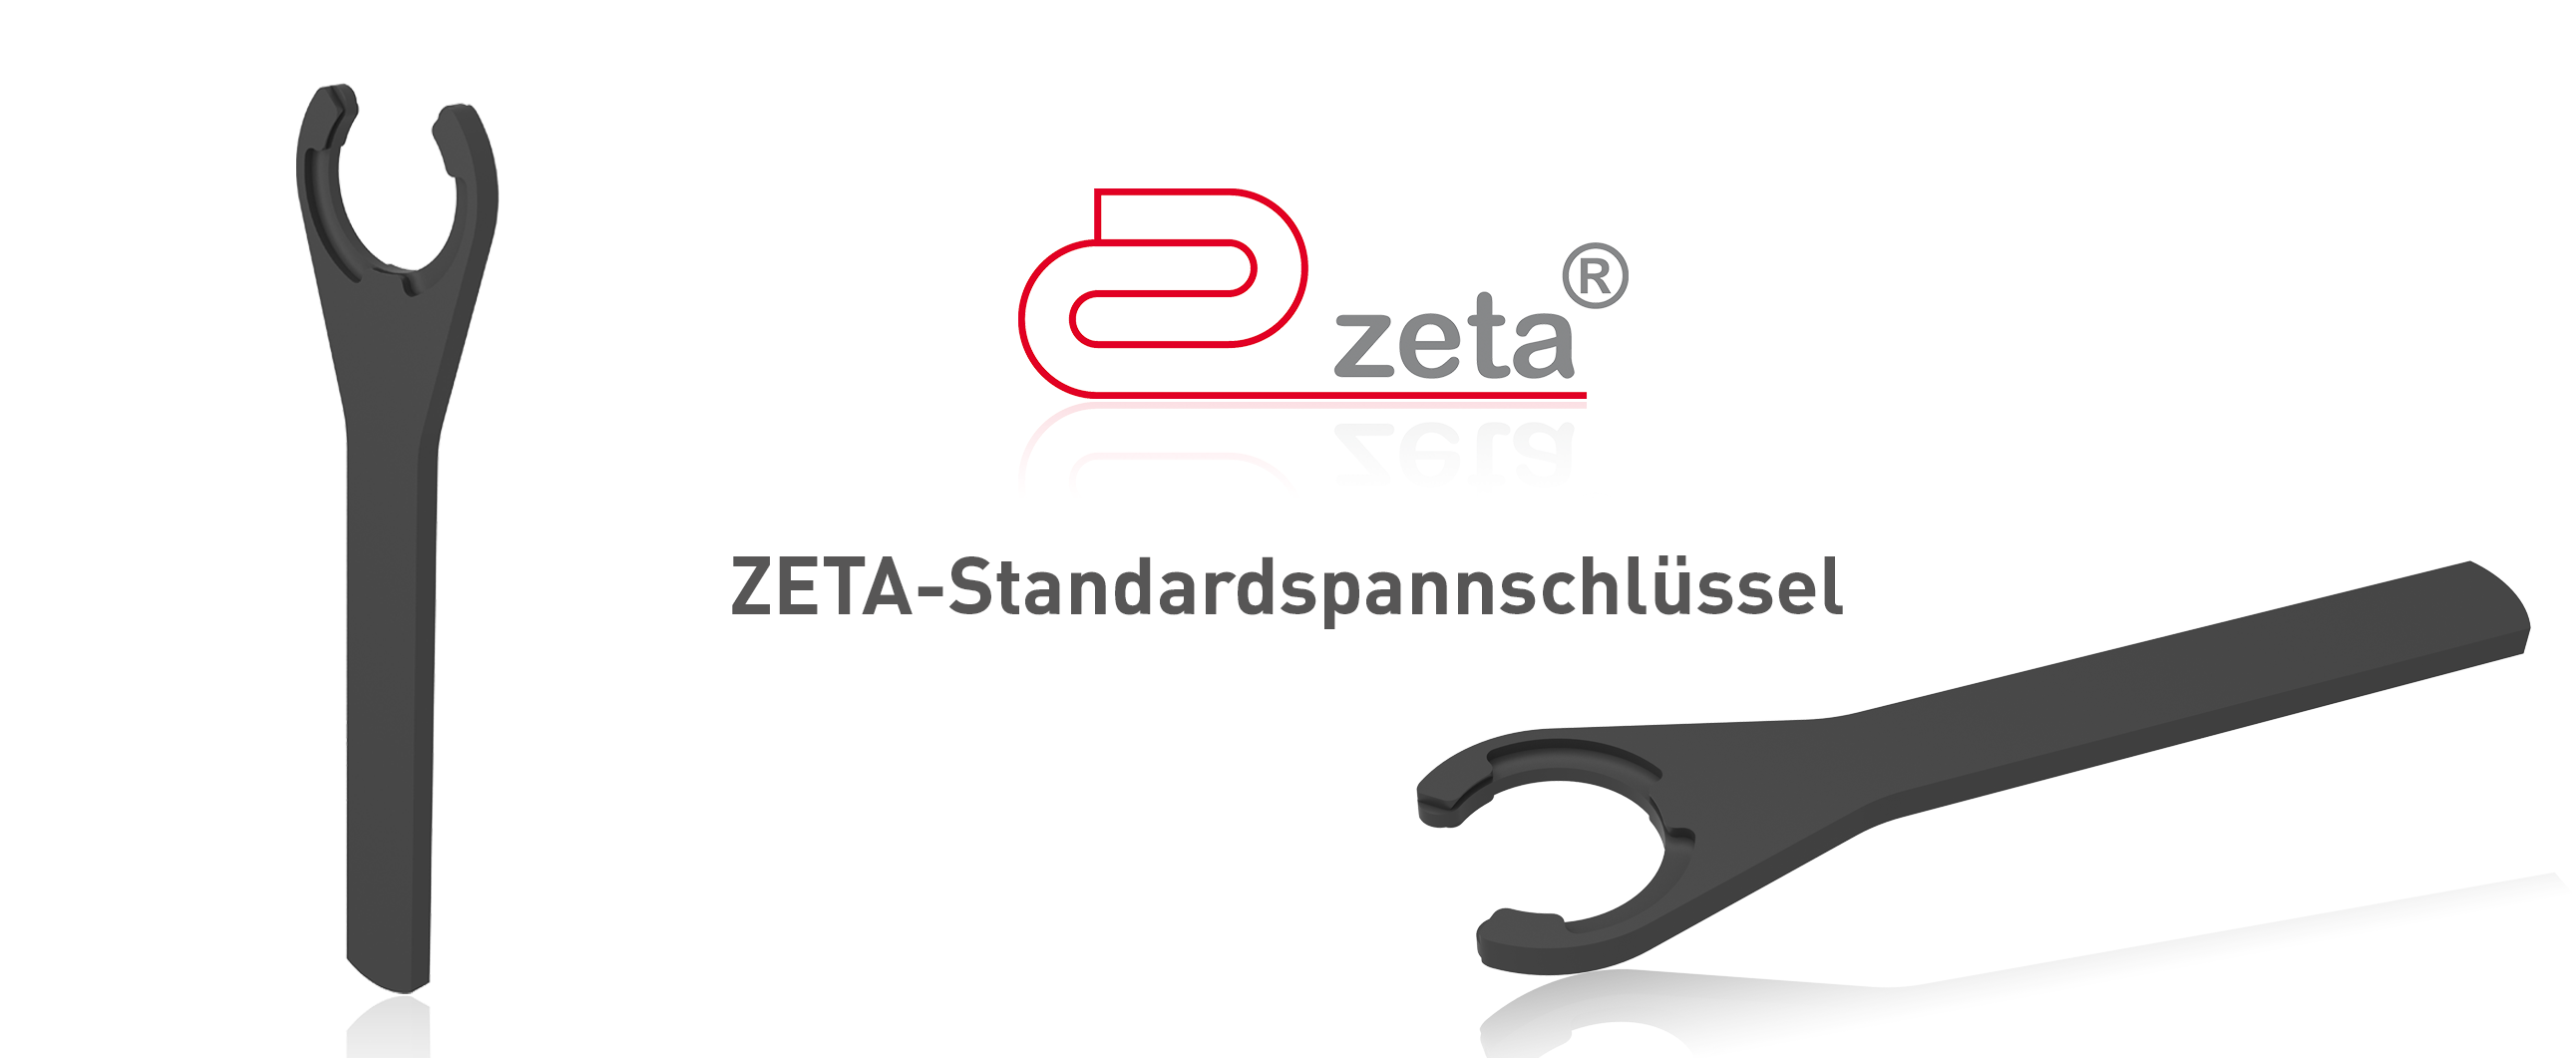 ZETA-Standardspannschlüssel